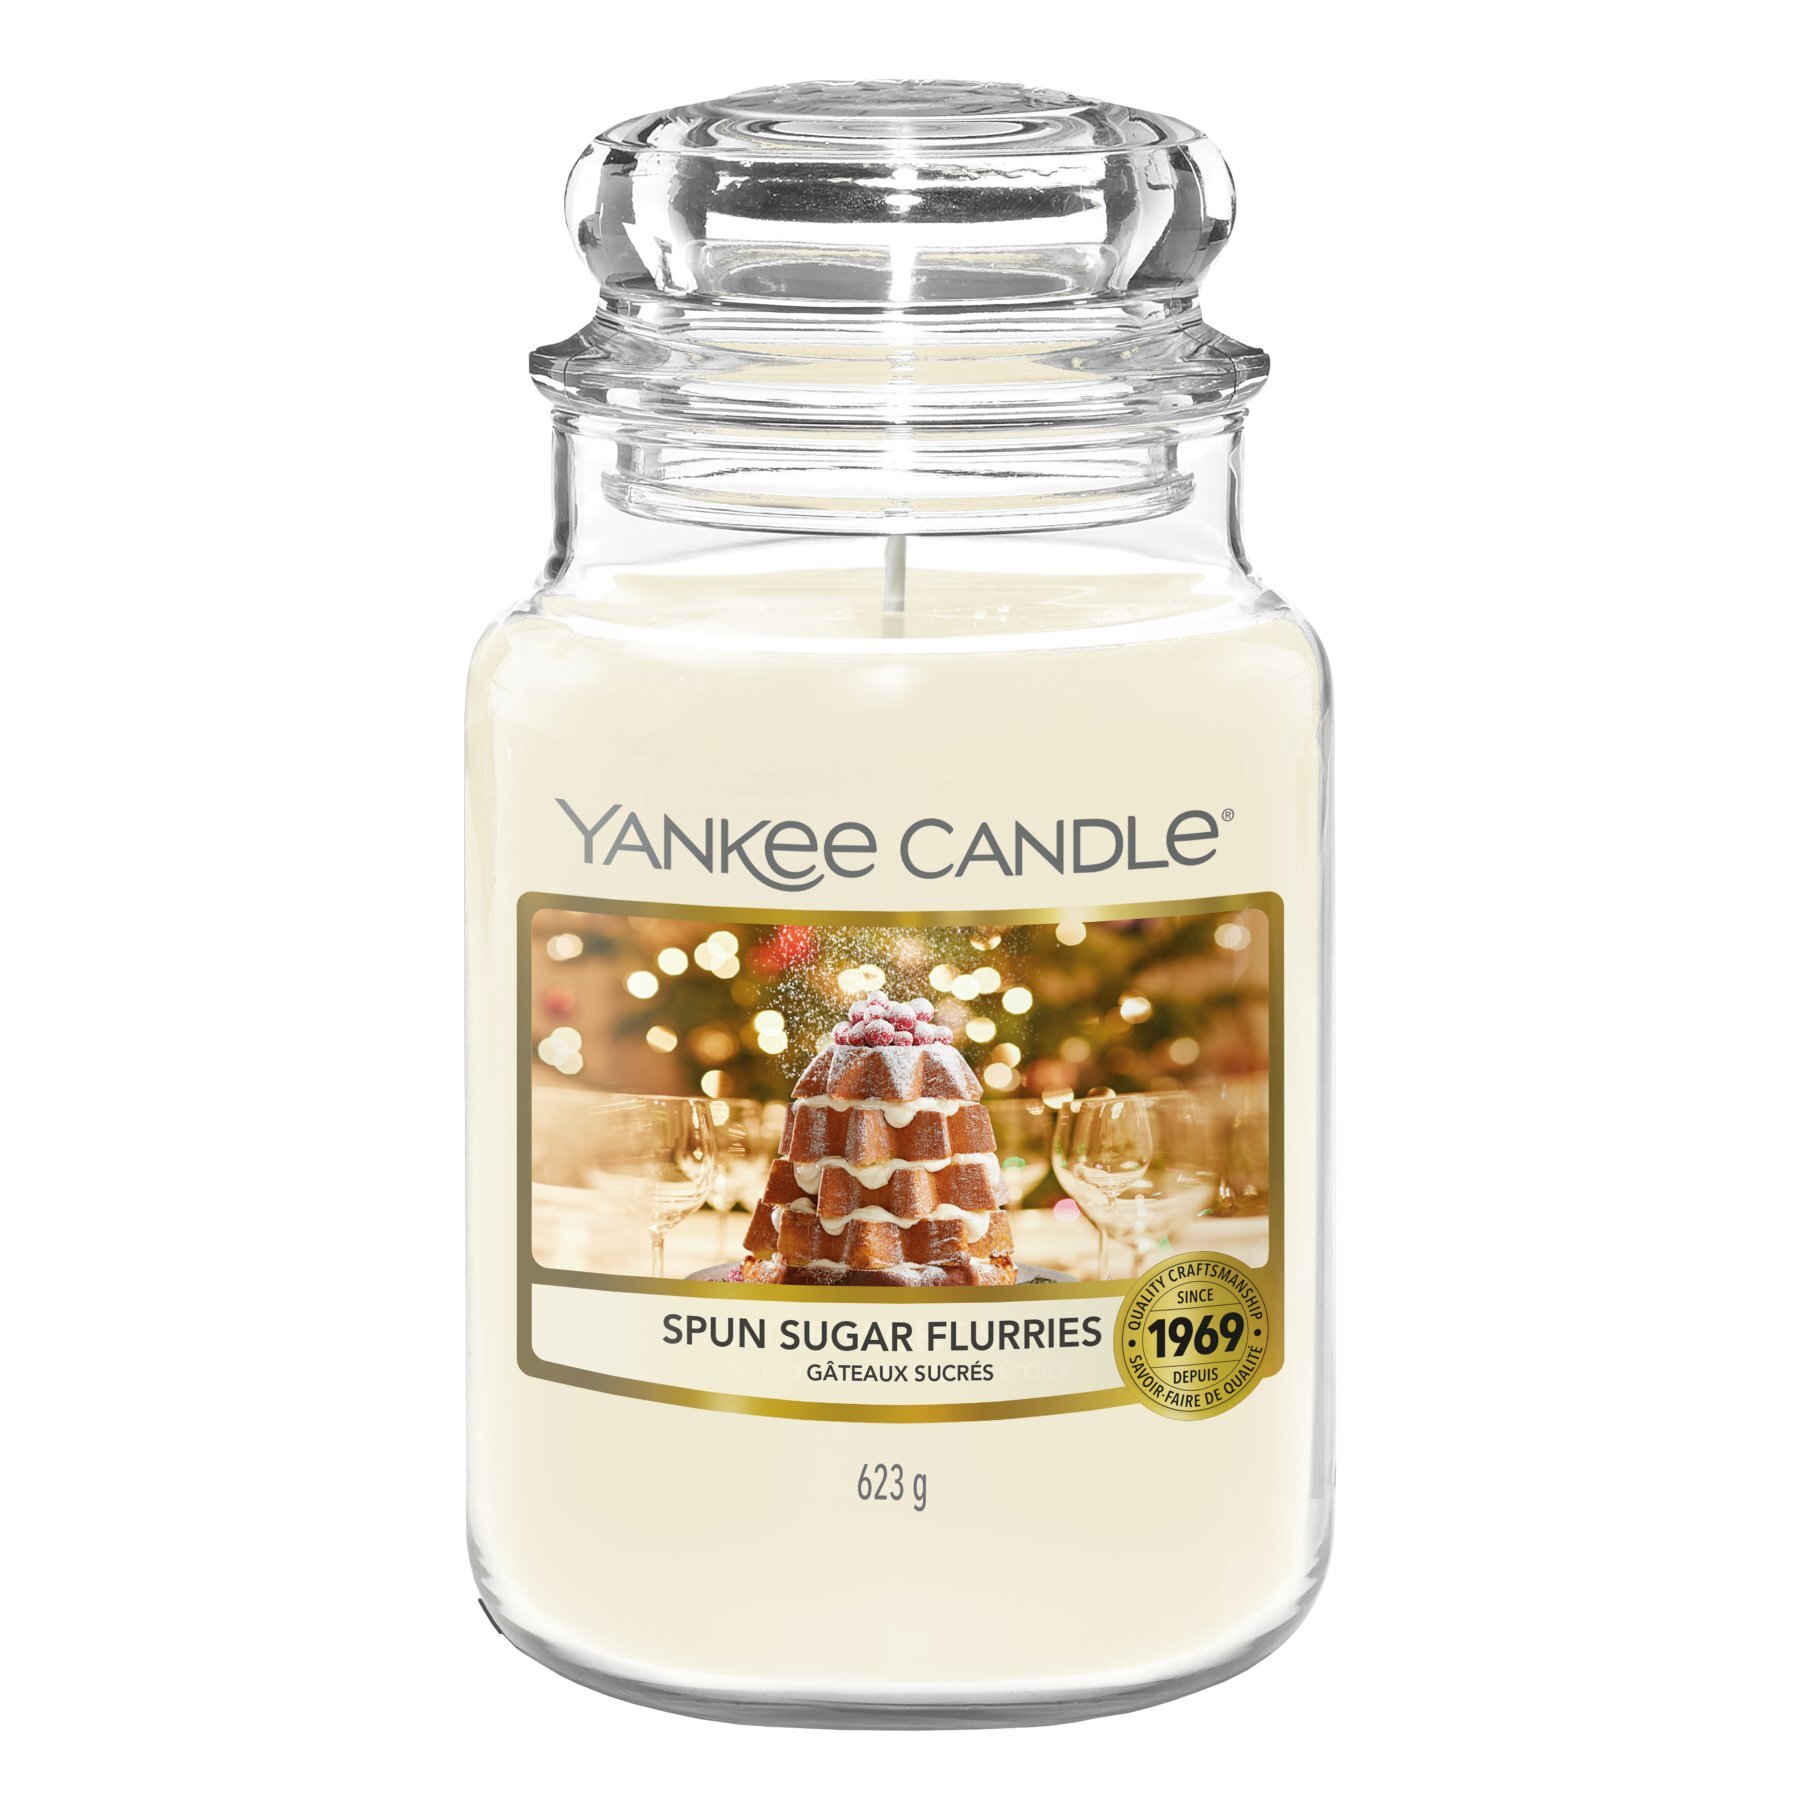 Yankee Candle Spun Sugar Fluries